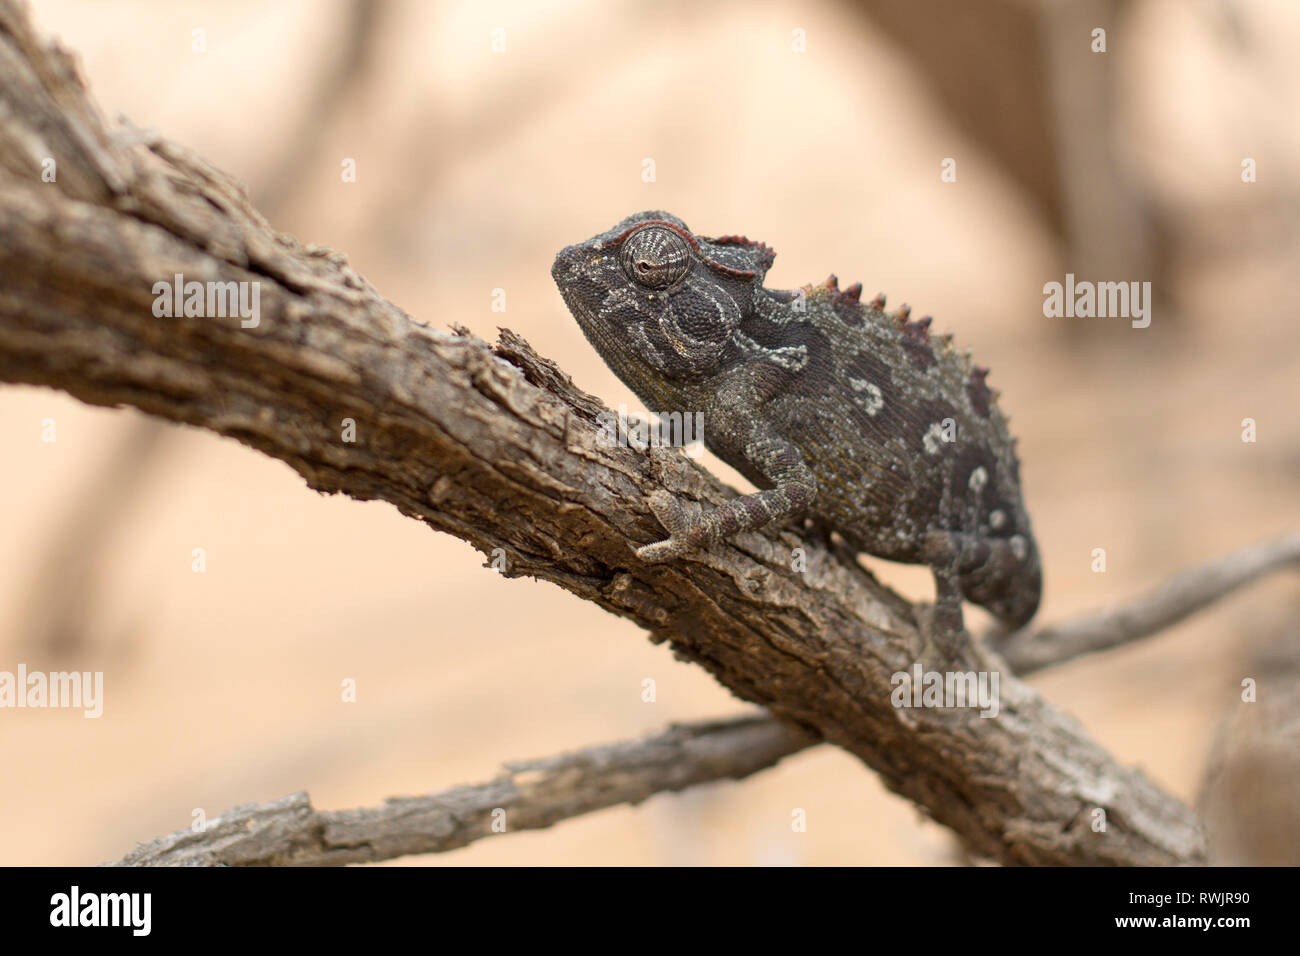 A Namaqua Chameleon in the Dorob National Park, Namibia. Stock Photo